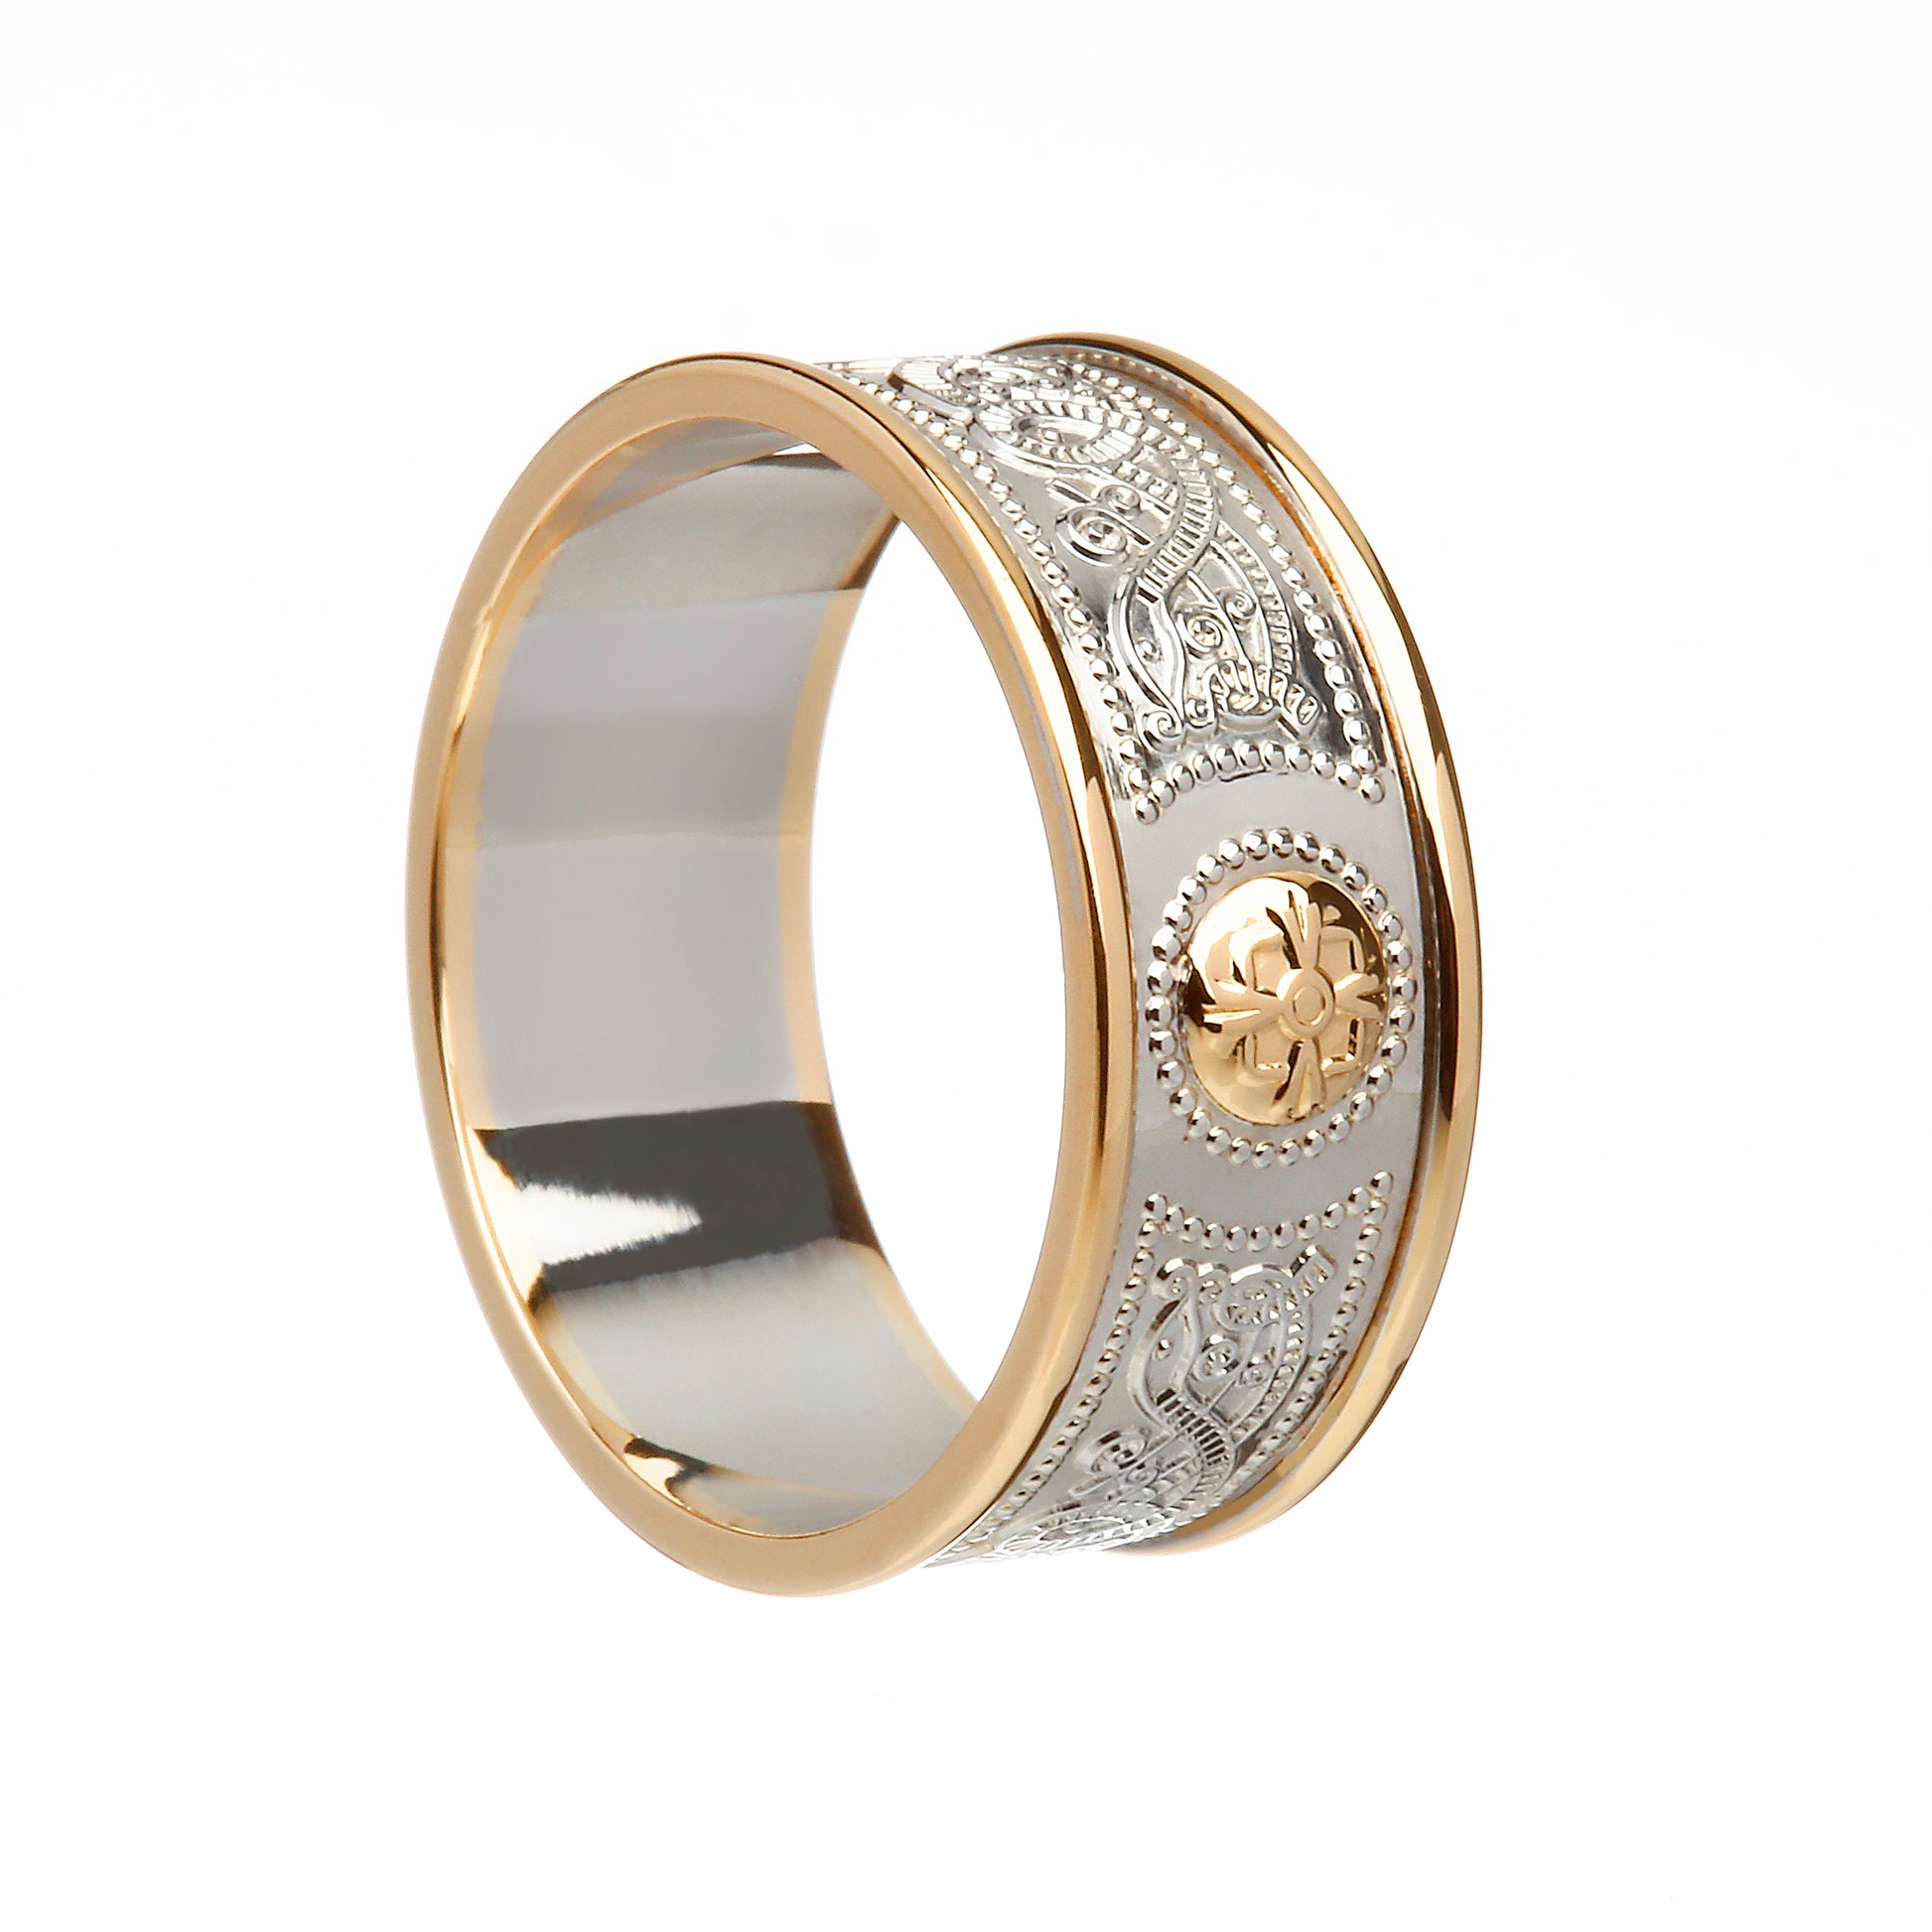 Men's 14K White Gold Wedding Ring with Yellow Gold Trim